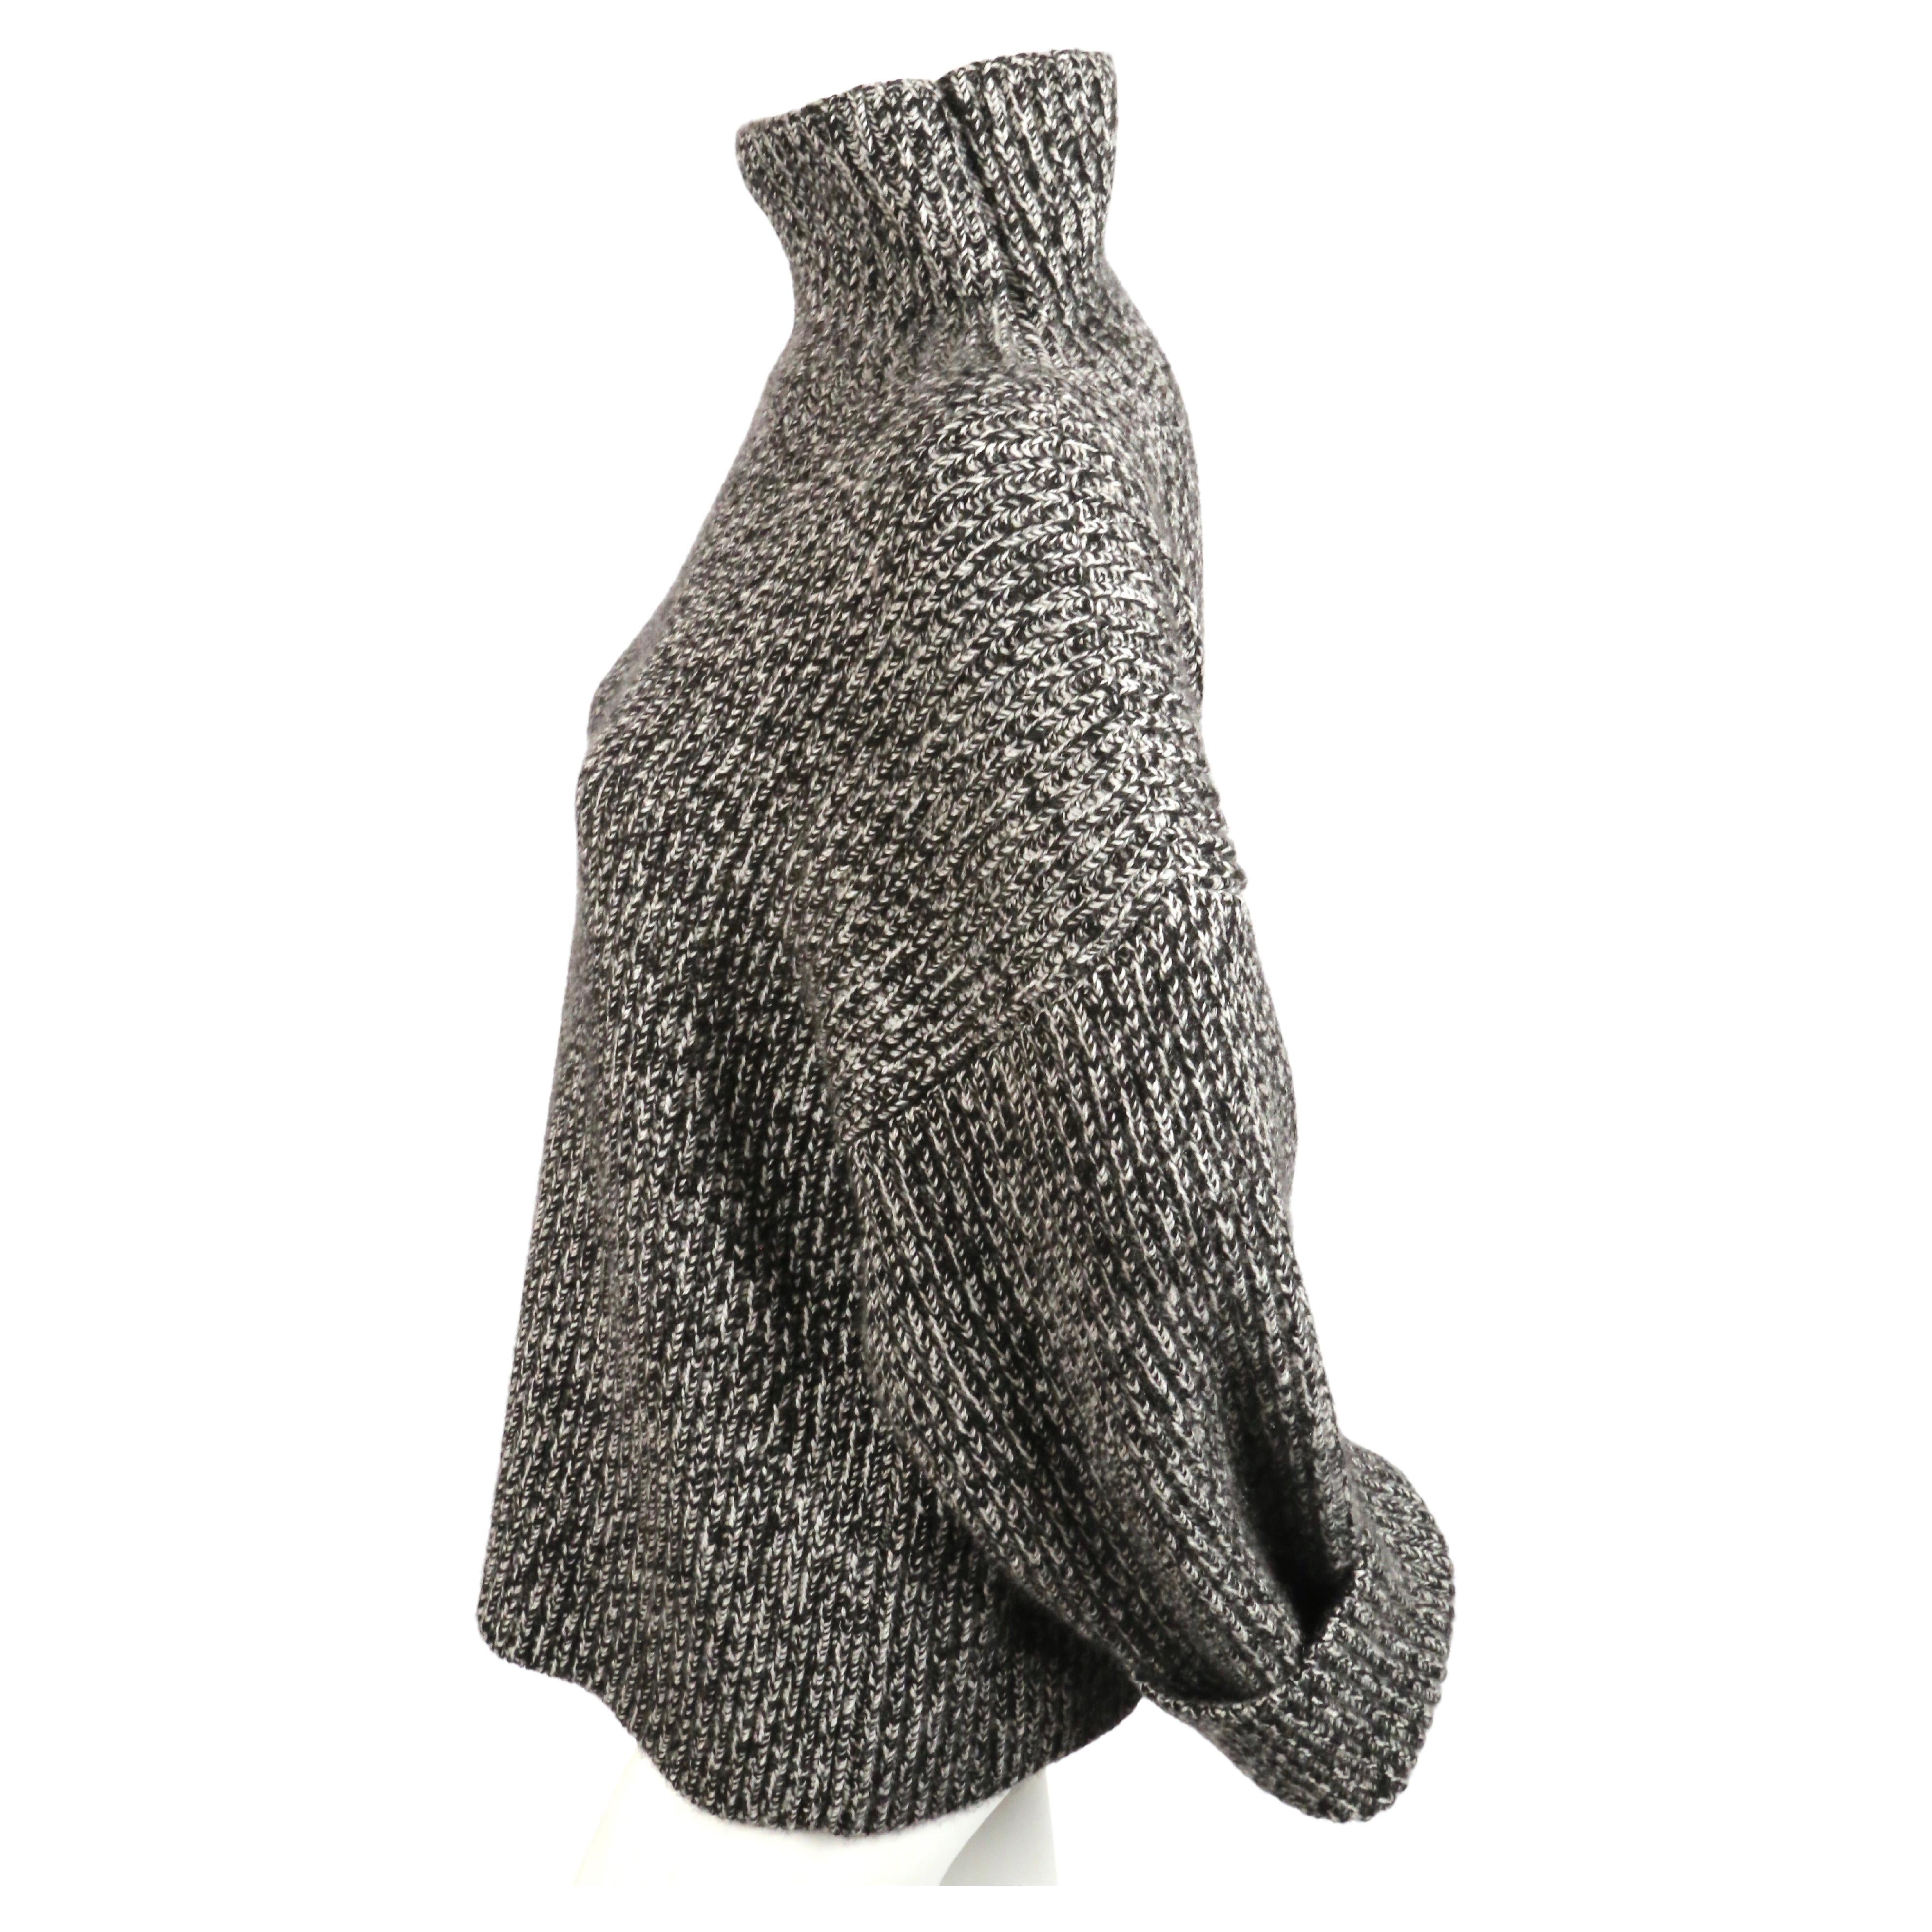 Women's or Men's CELINE by PHOEBE PHILO black cashmere turtleneck sweater with underarm cutouts